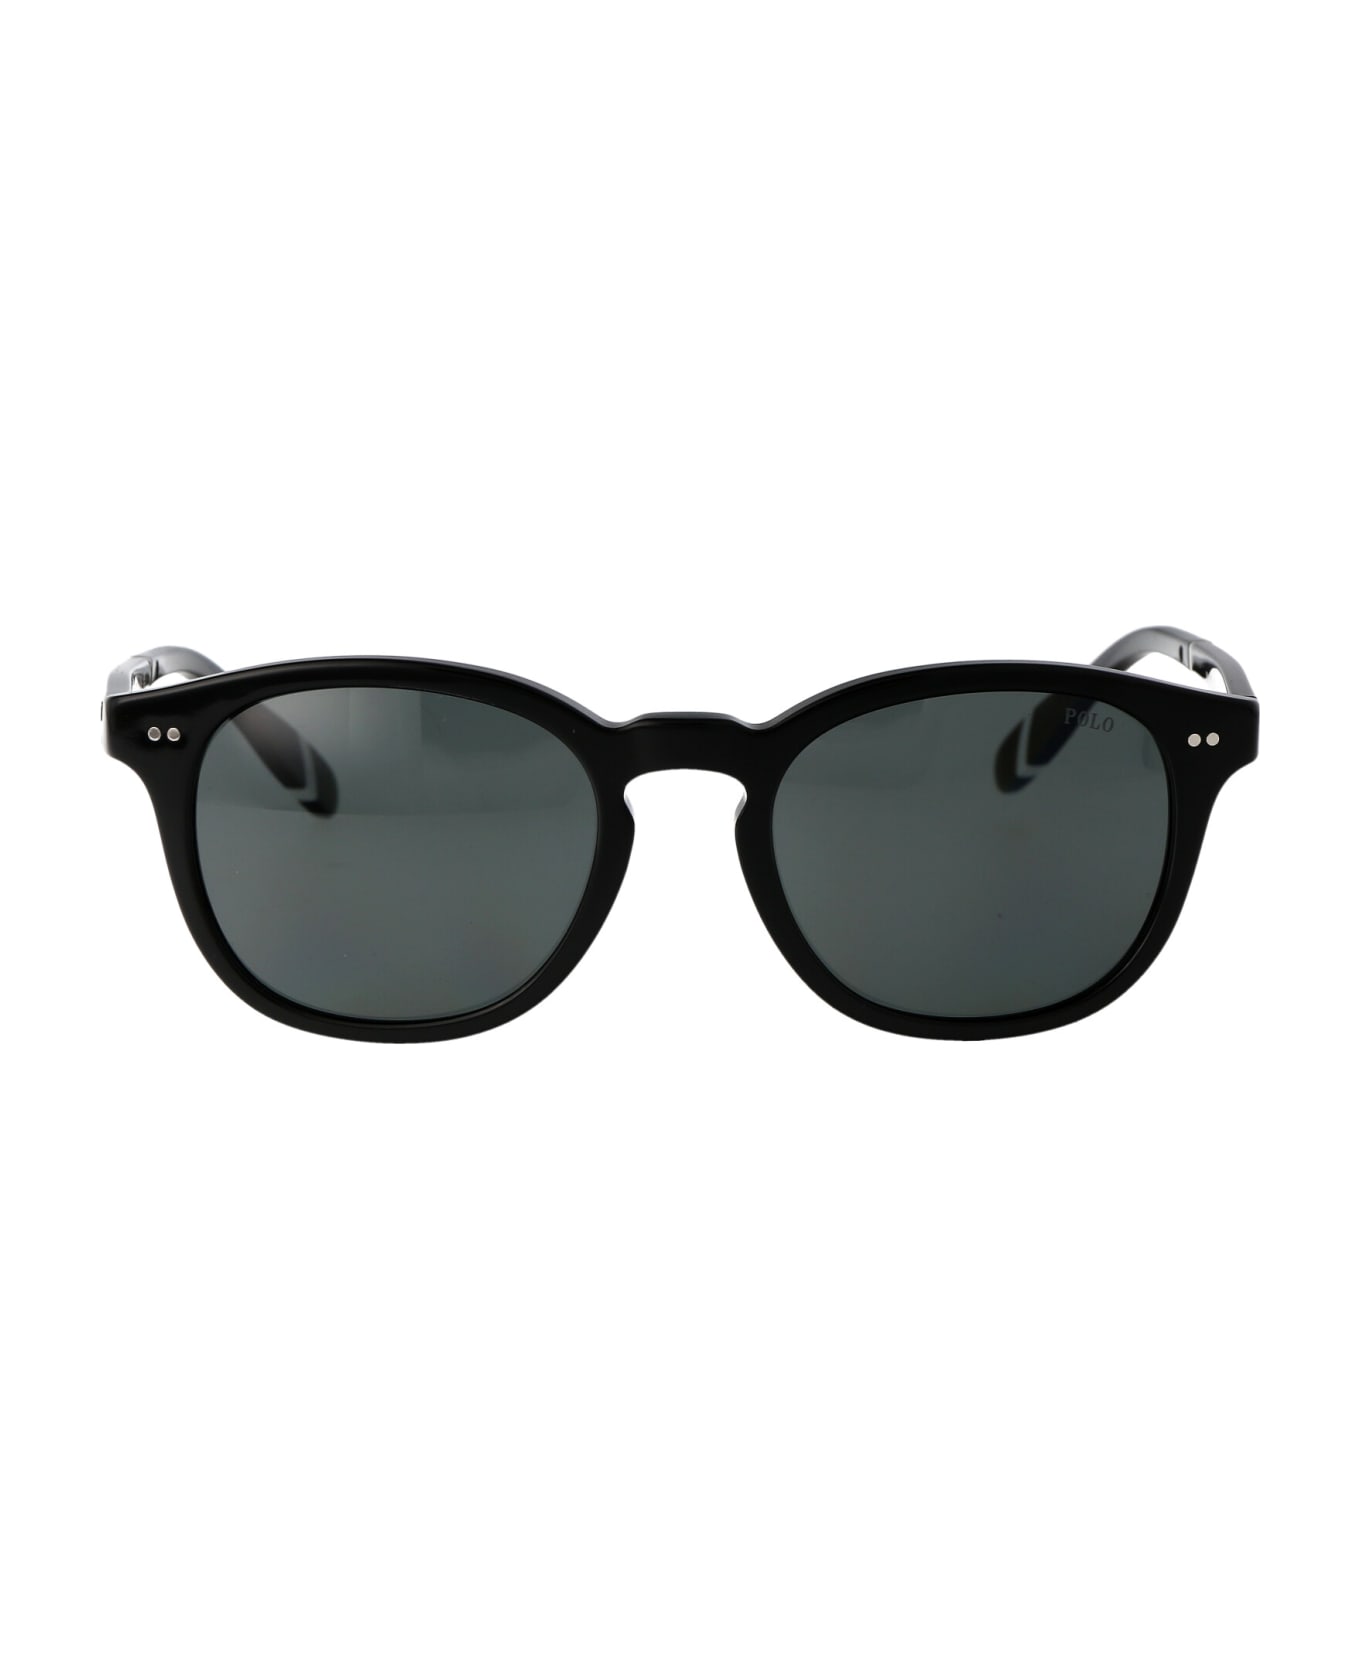 Polo Ralph Lauren 0ph4206 Sunglasses - 500187 SHINY BLACK